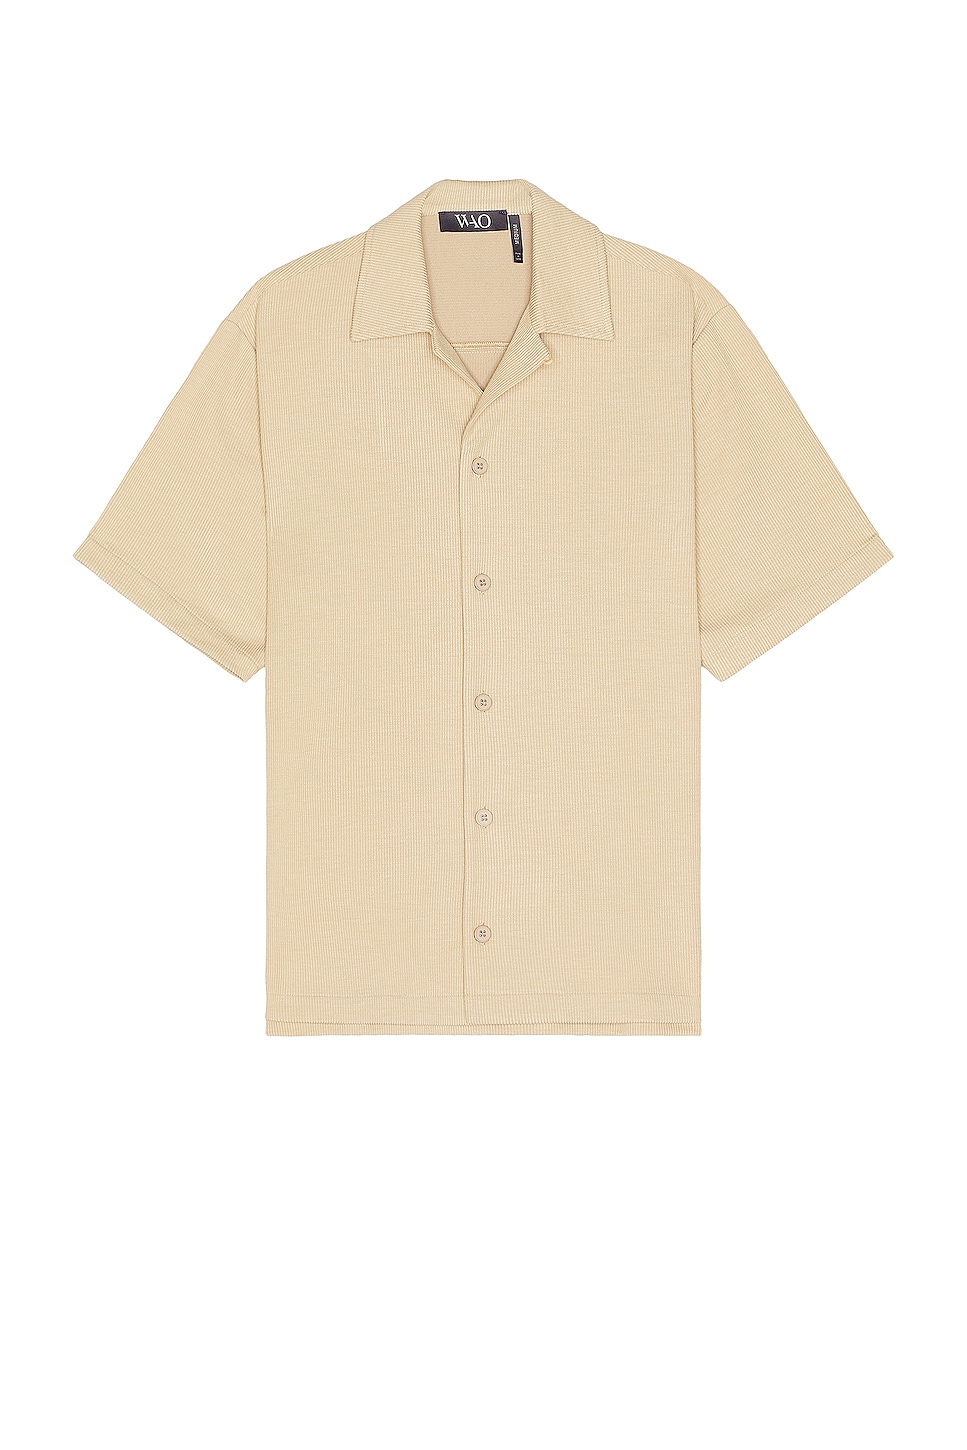 Image 1 of WAO Ribbed Knit Camp Shirt in tan